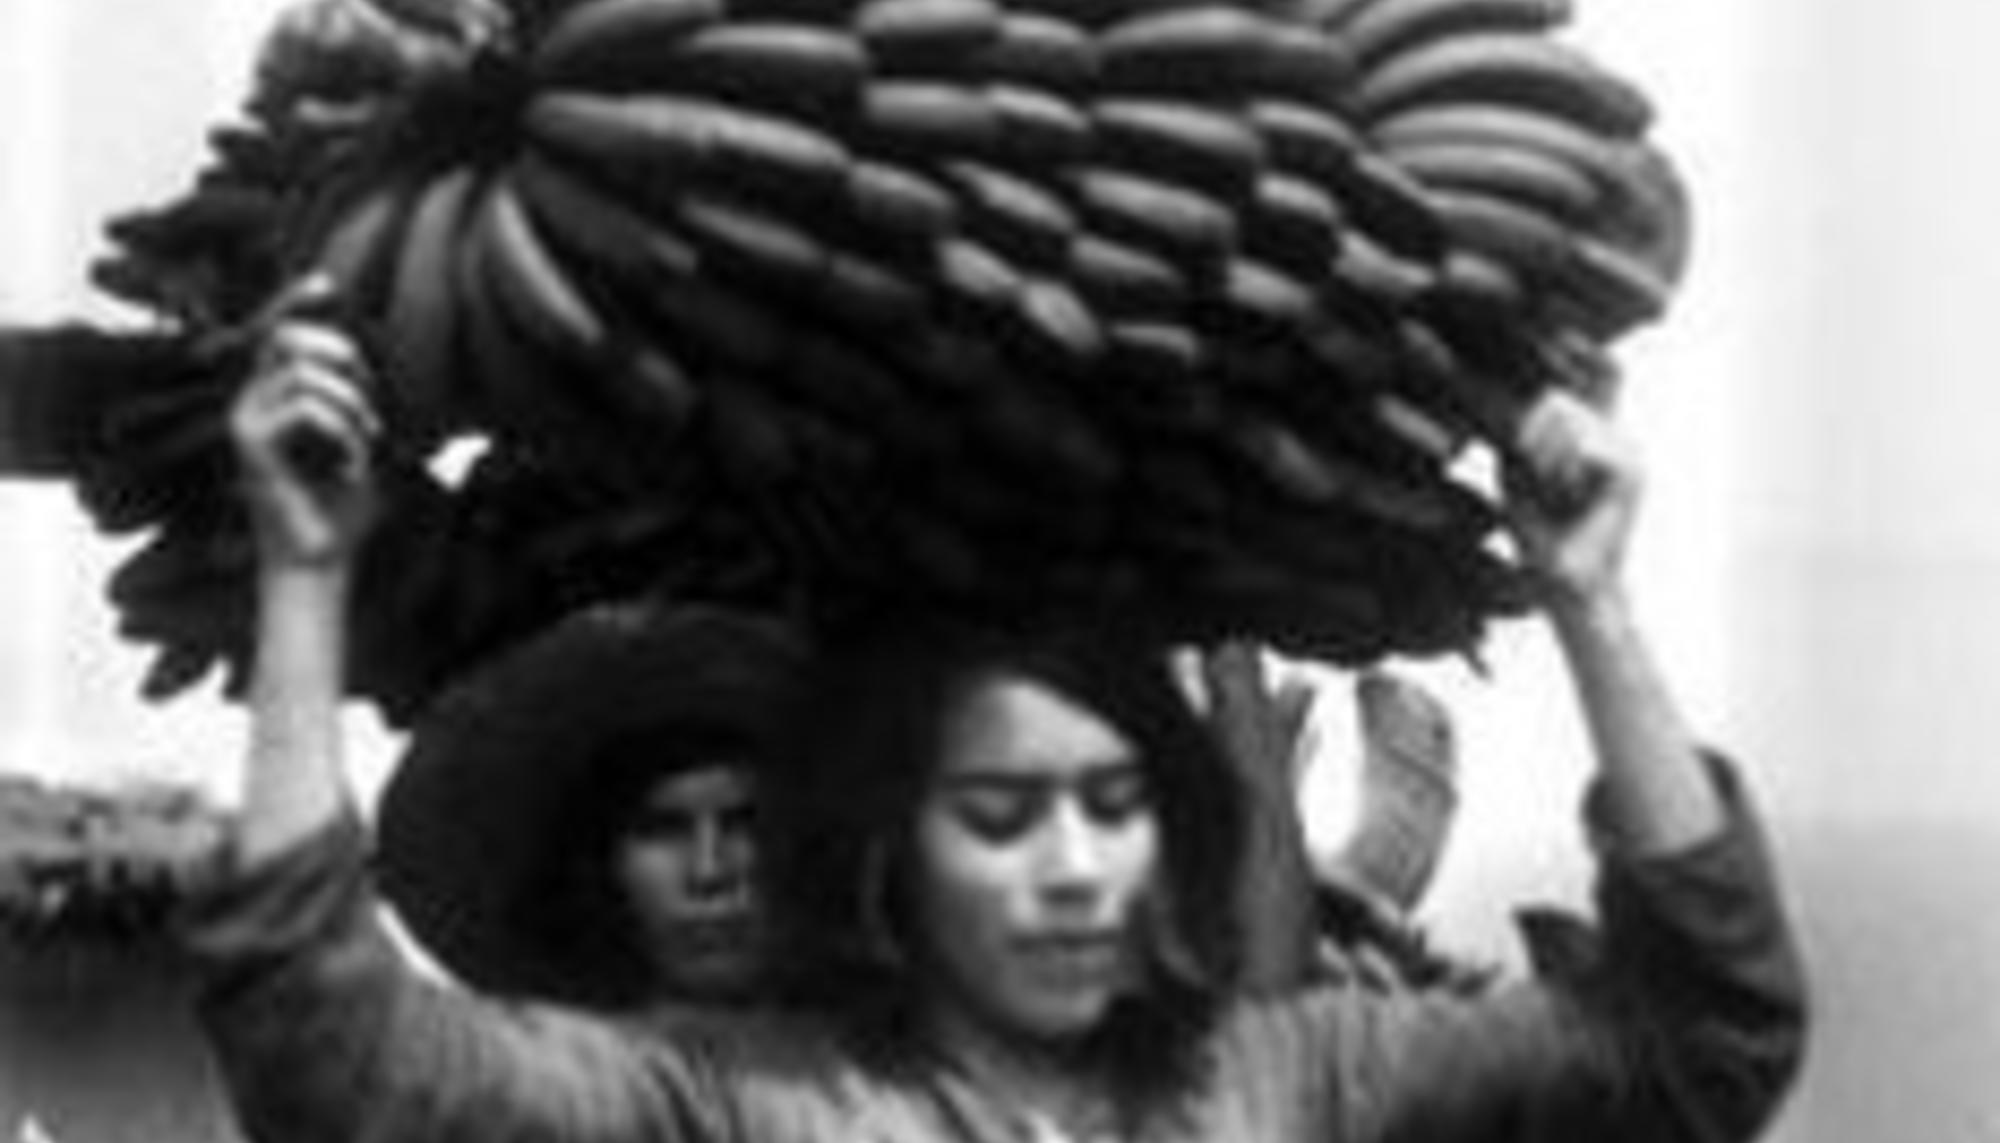 Fotograma del documental "Tenerife" de Ives Allegret (Tenerife, 1932).